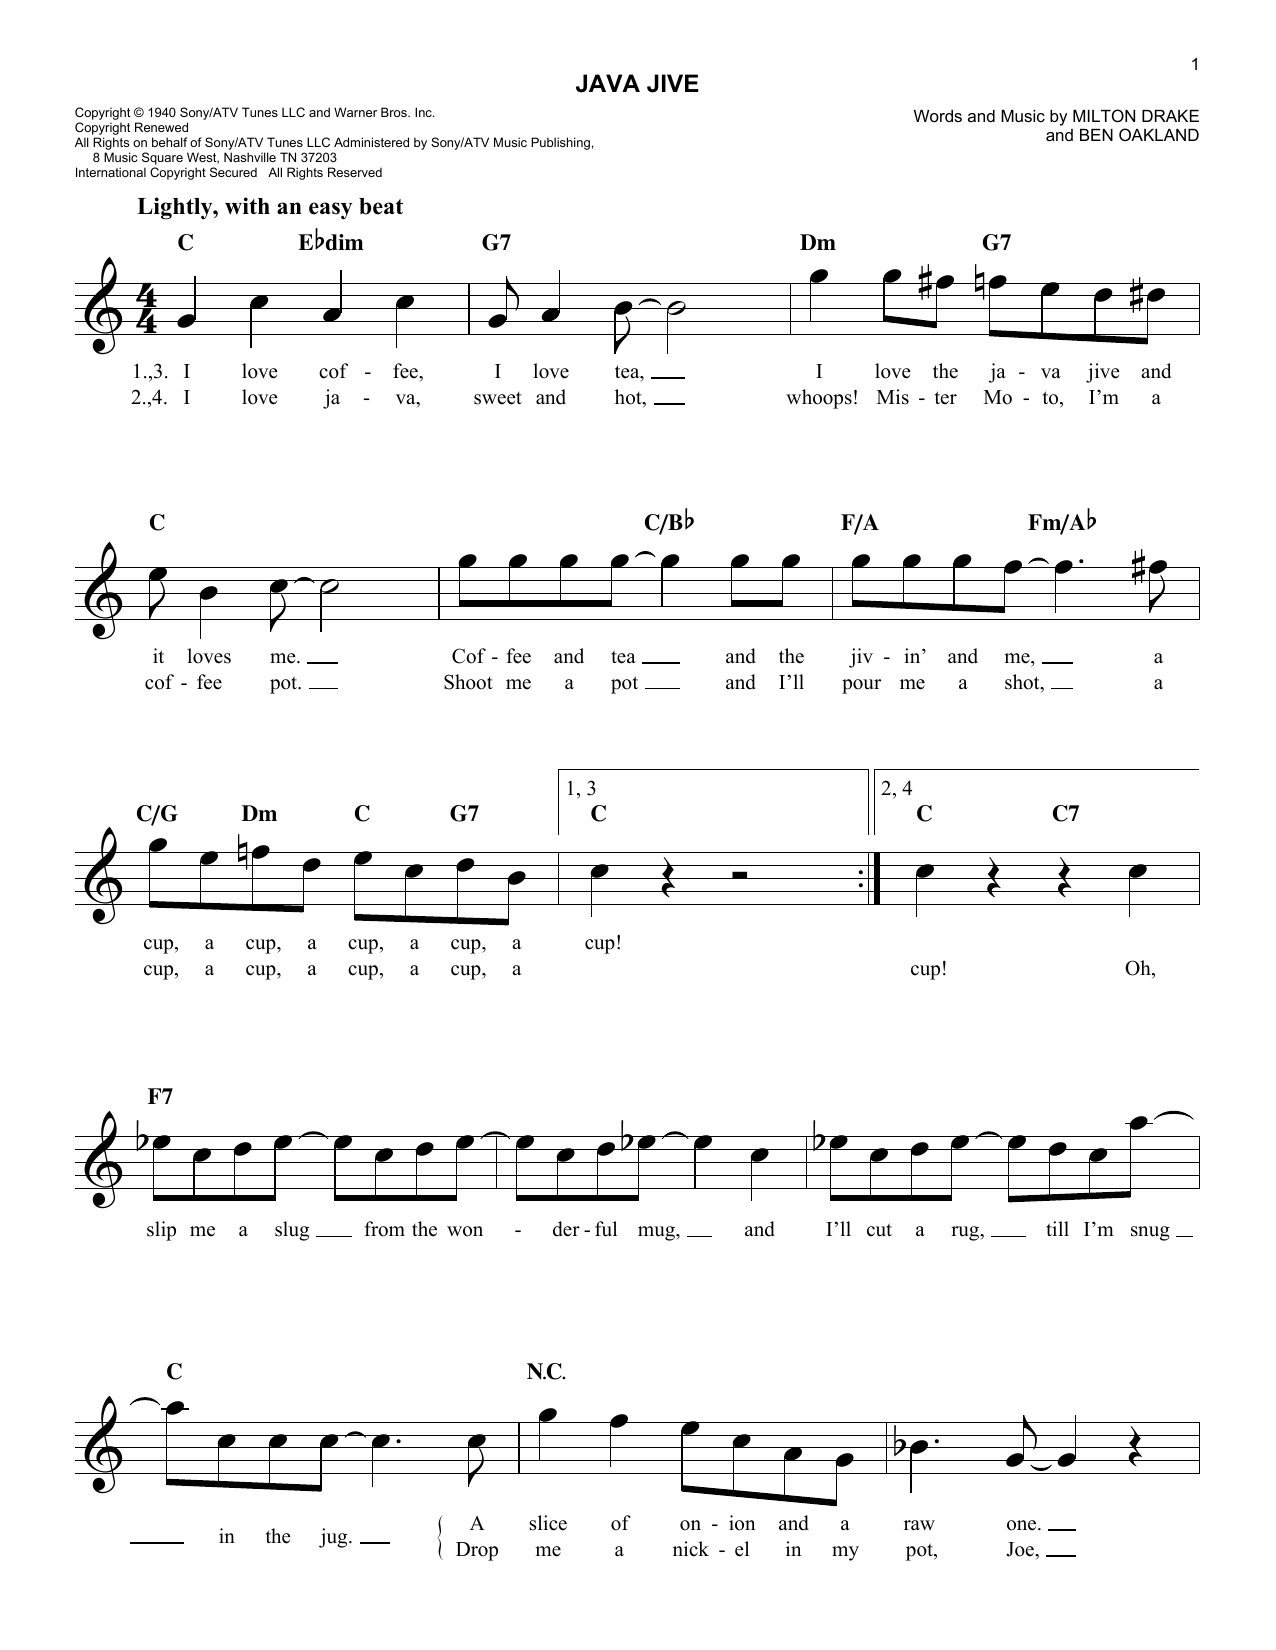 Ben Oakland Java Jive Sheet Music Notes & Chords for Ukulele - Download or Print PDF